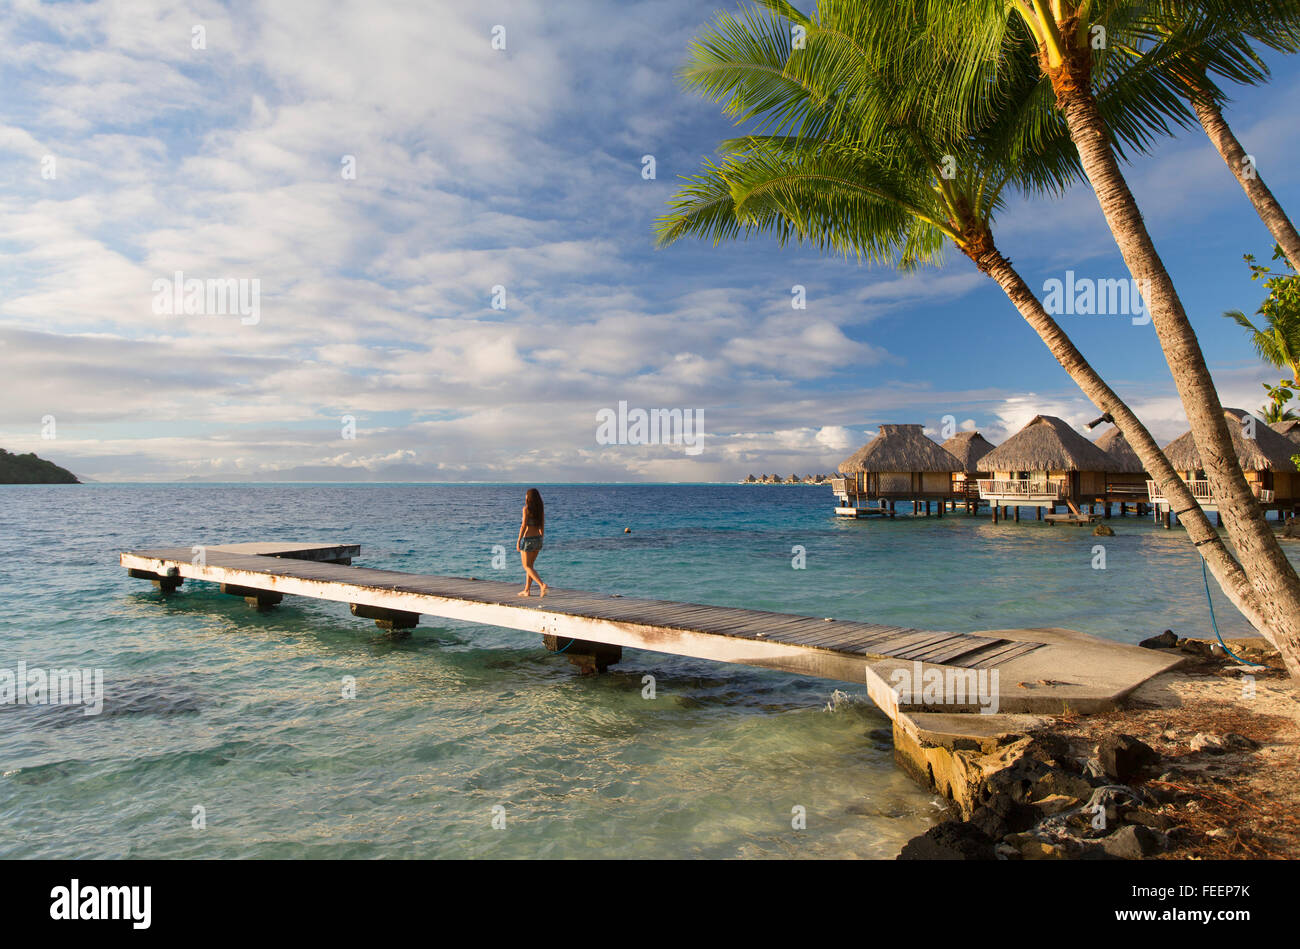 Woman walking on jetty with overwater bungalows of Le Maitai Hotel, Bora Bora, Society Islands, French Polynesia Stock Photo